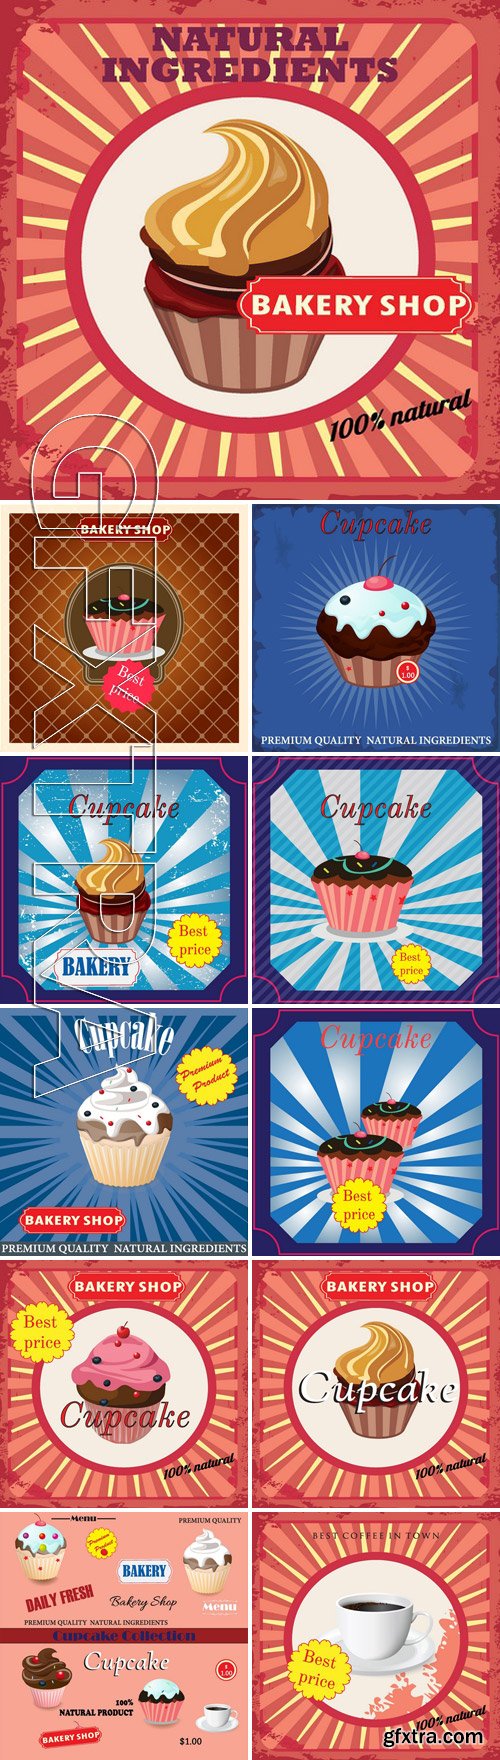 Stock Vectors - Cupcake bakery shop poster